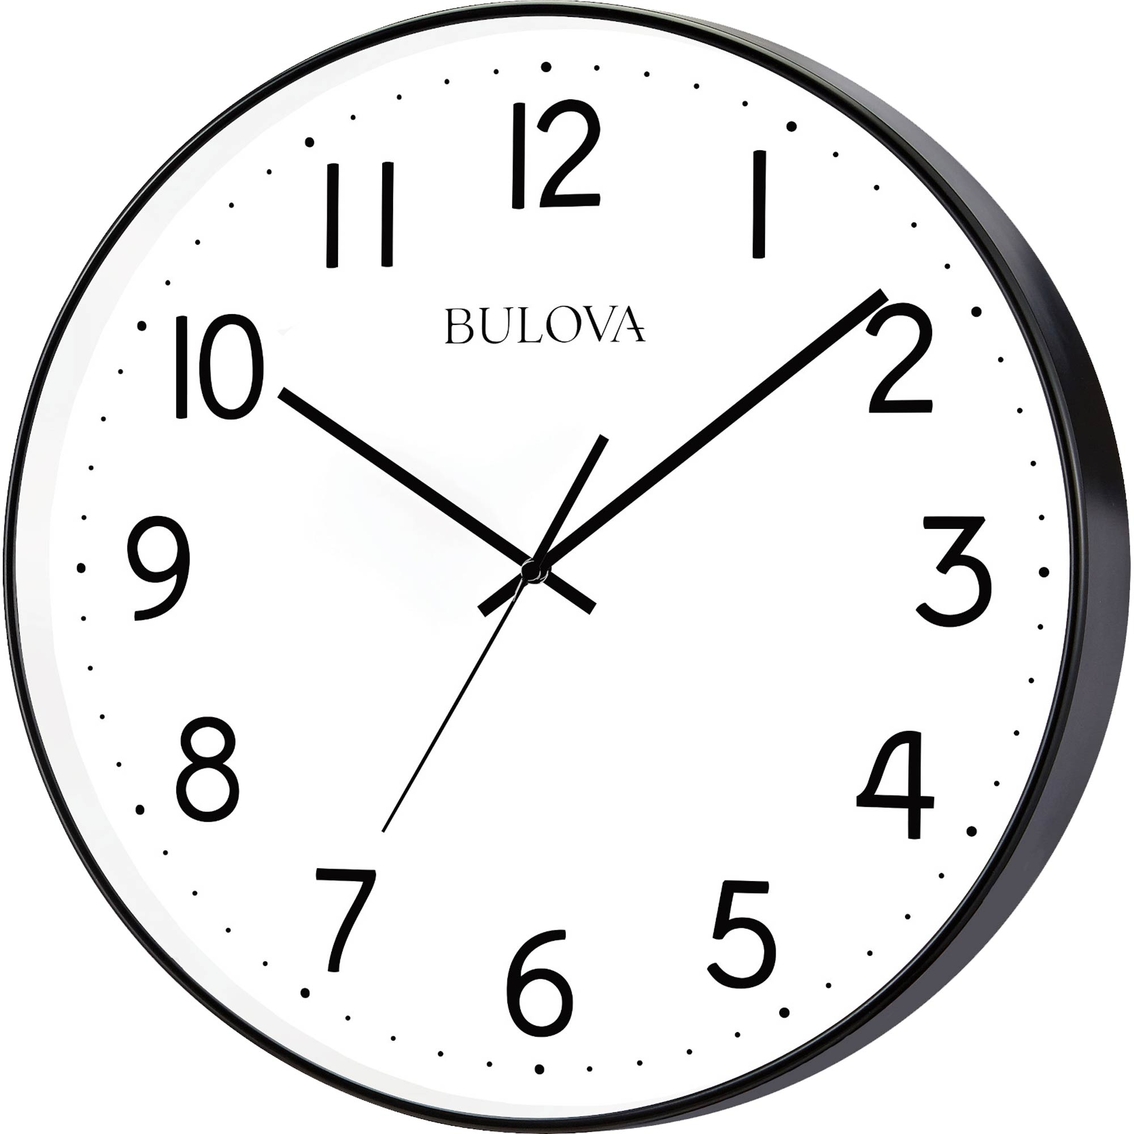 Bulova The Office Mate Clock - Image 2 of 2